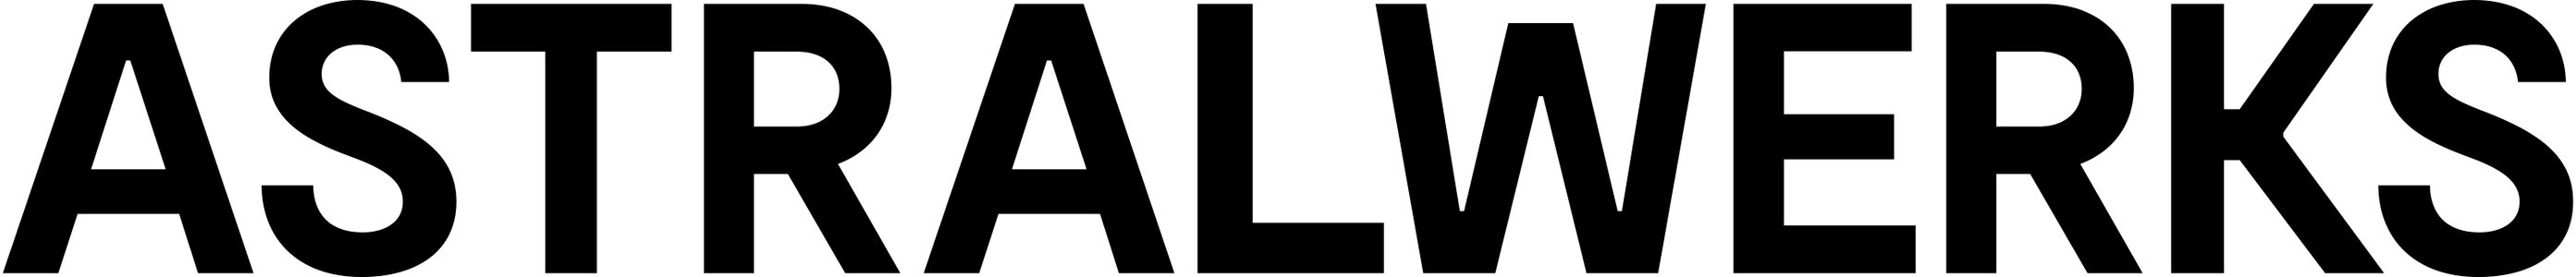 Astralwerks Label Group logo